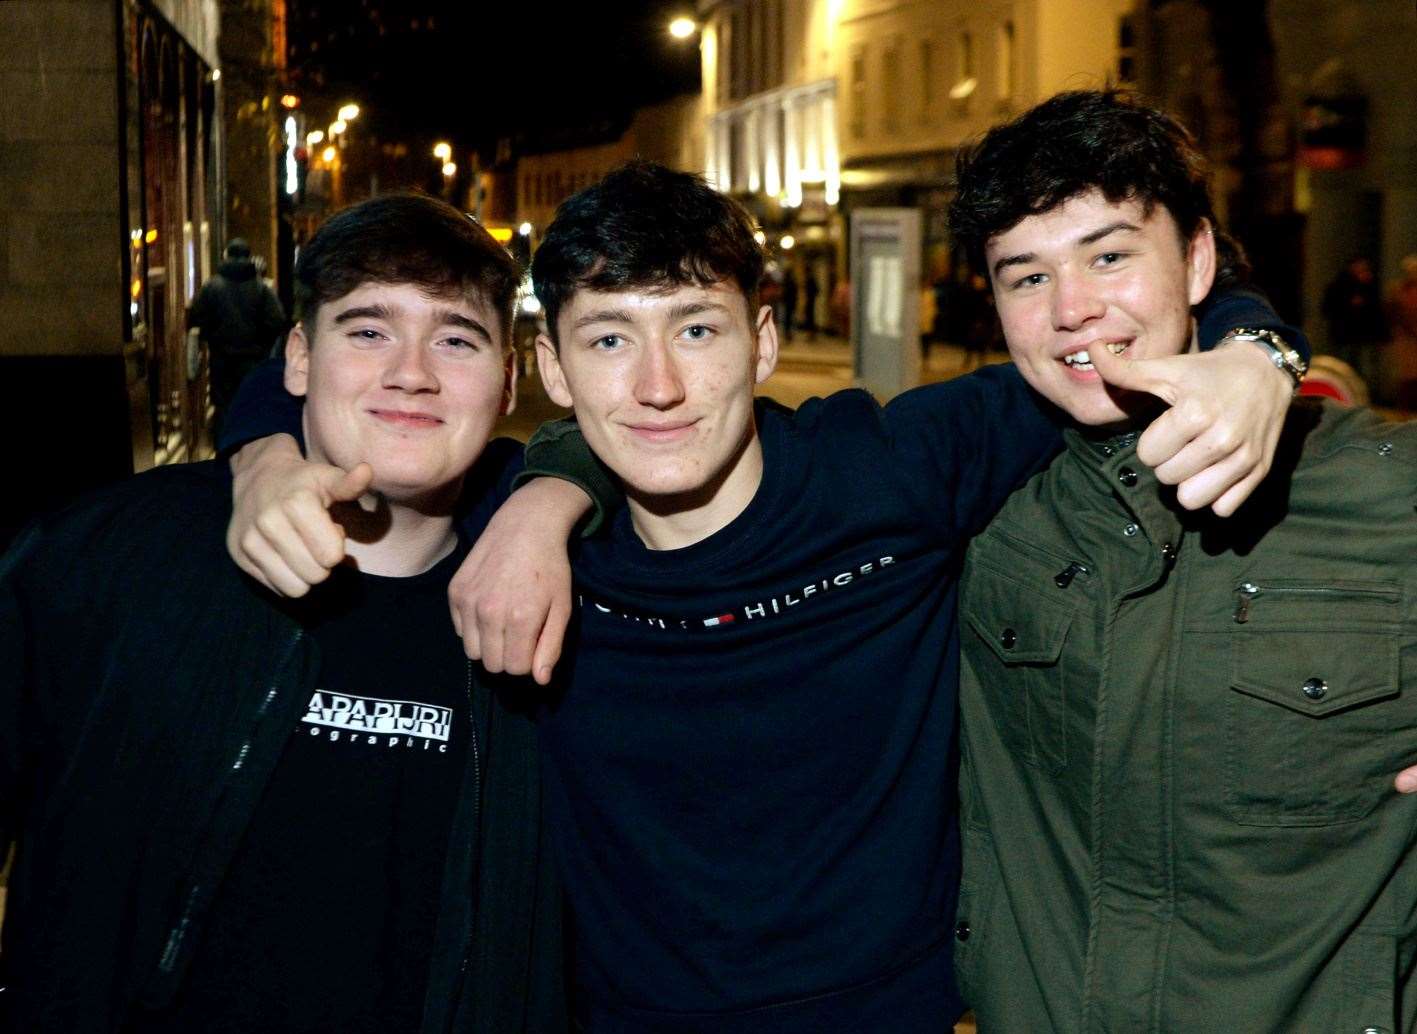 Andrew McDowall, Kieran Hooper and William Ross. Picture: James Mackenzie.